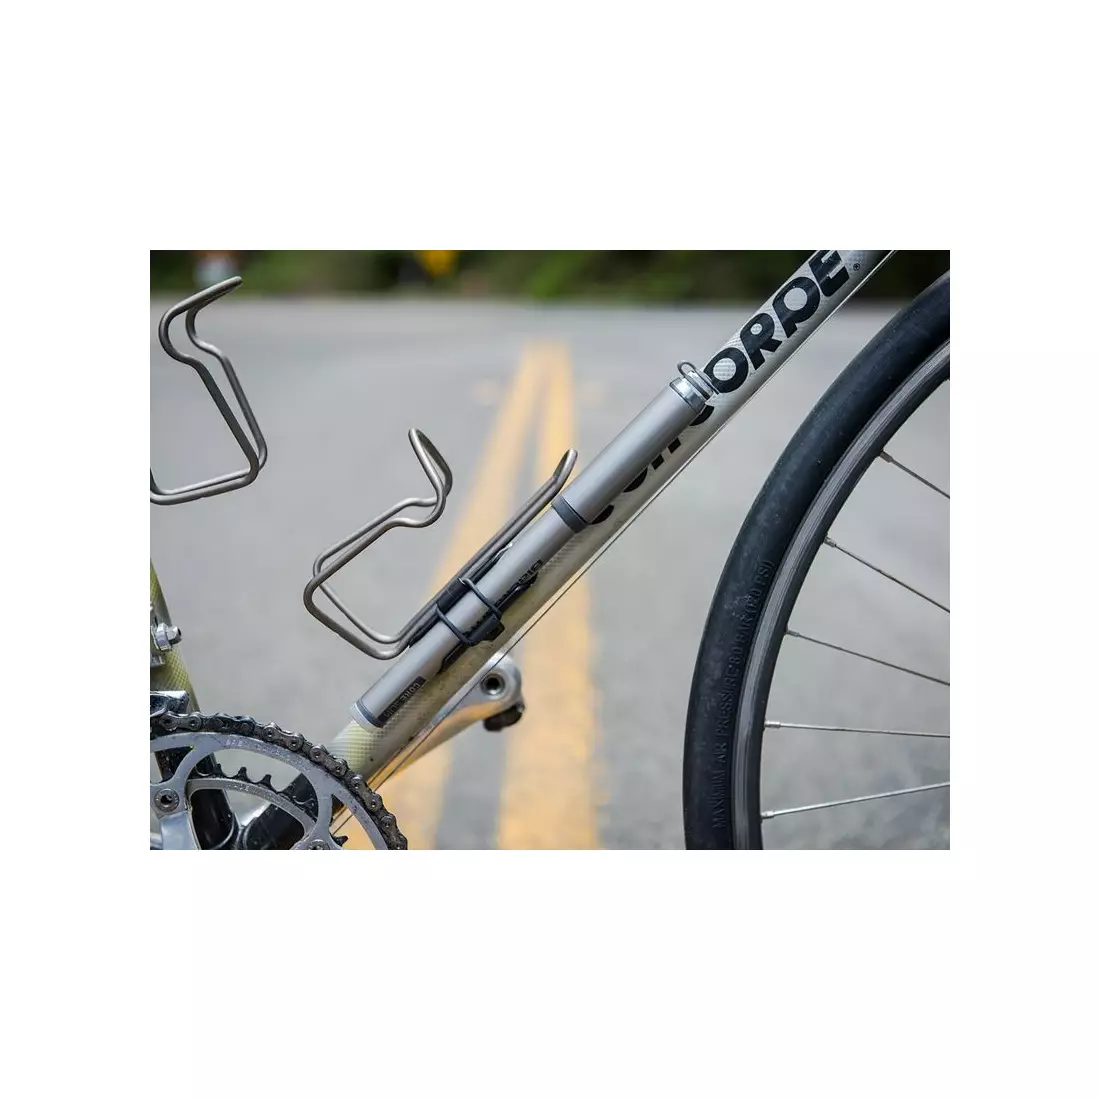 BLACKBURN hand bicycle pump core slim hp 120psi graphite BBN-7085521